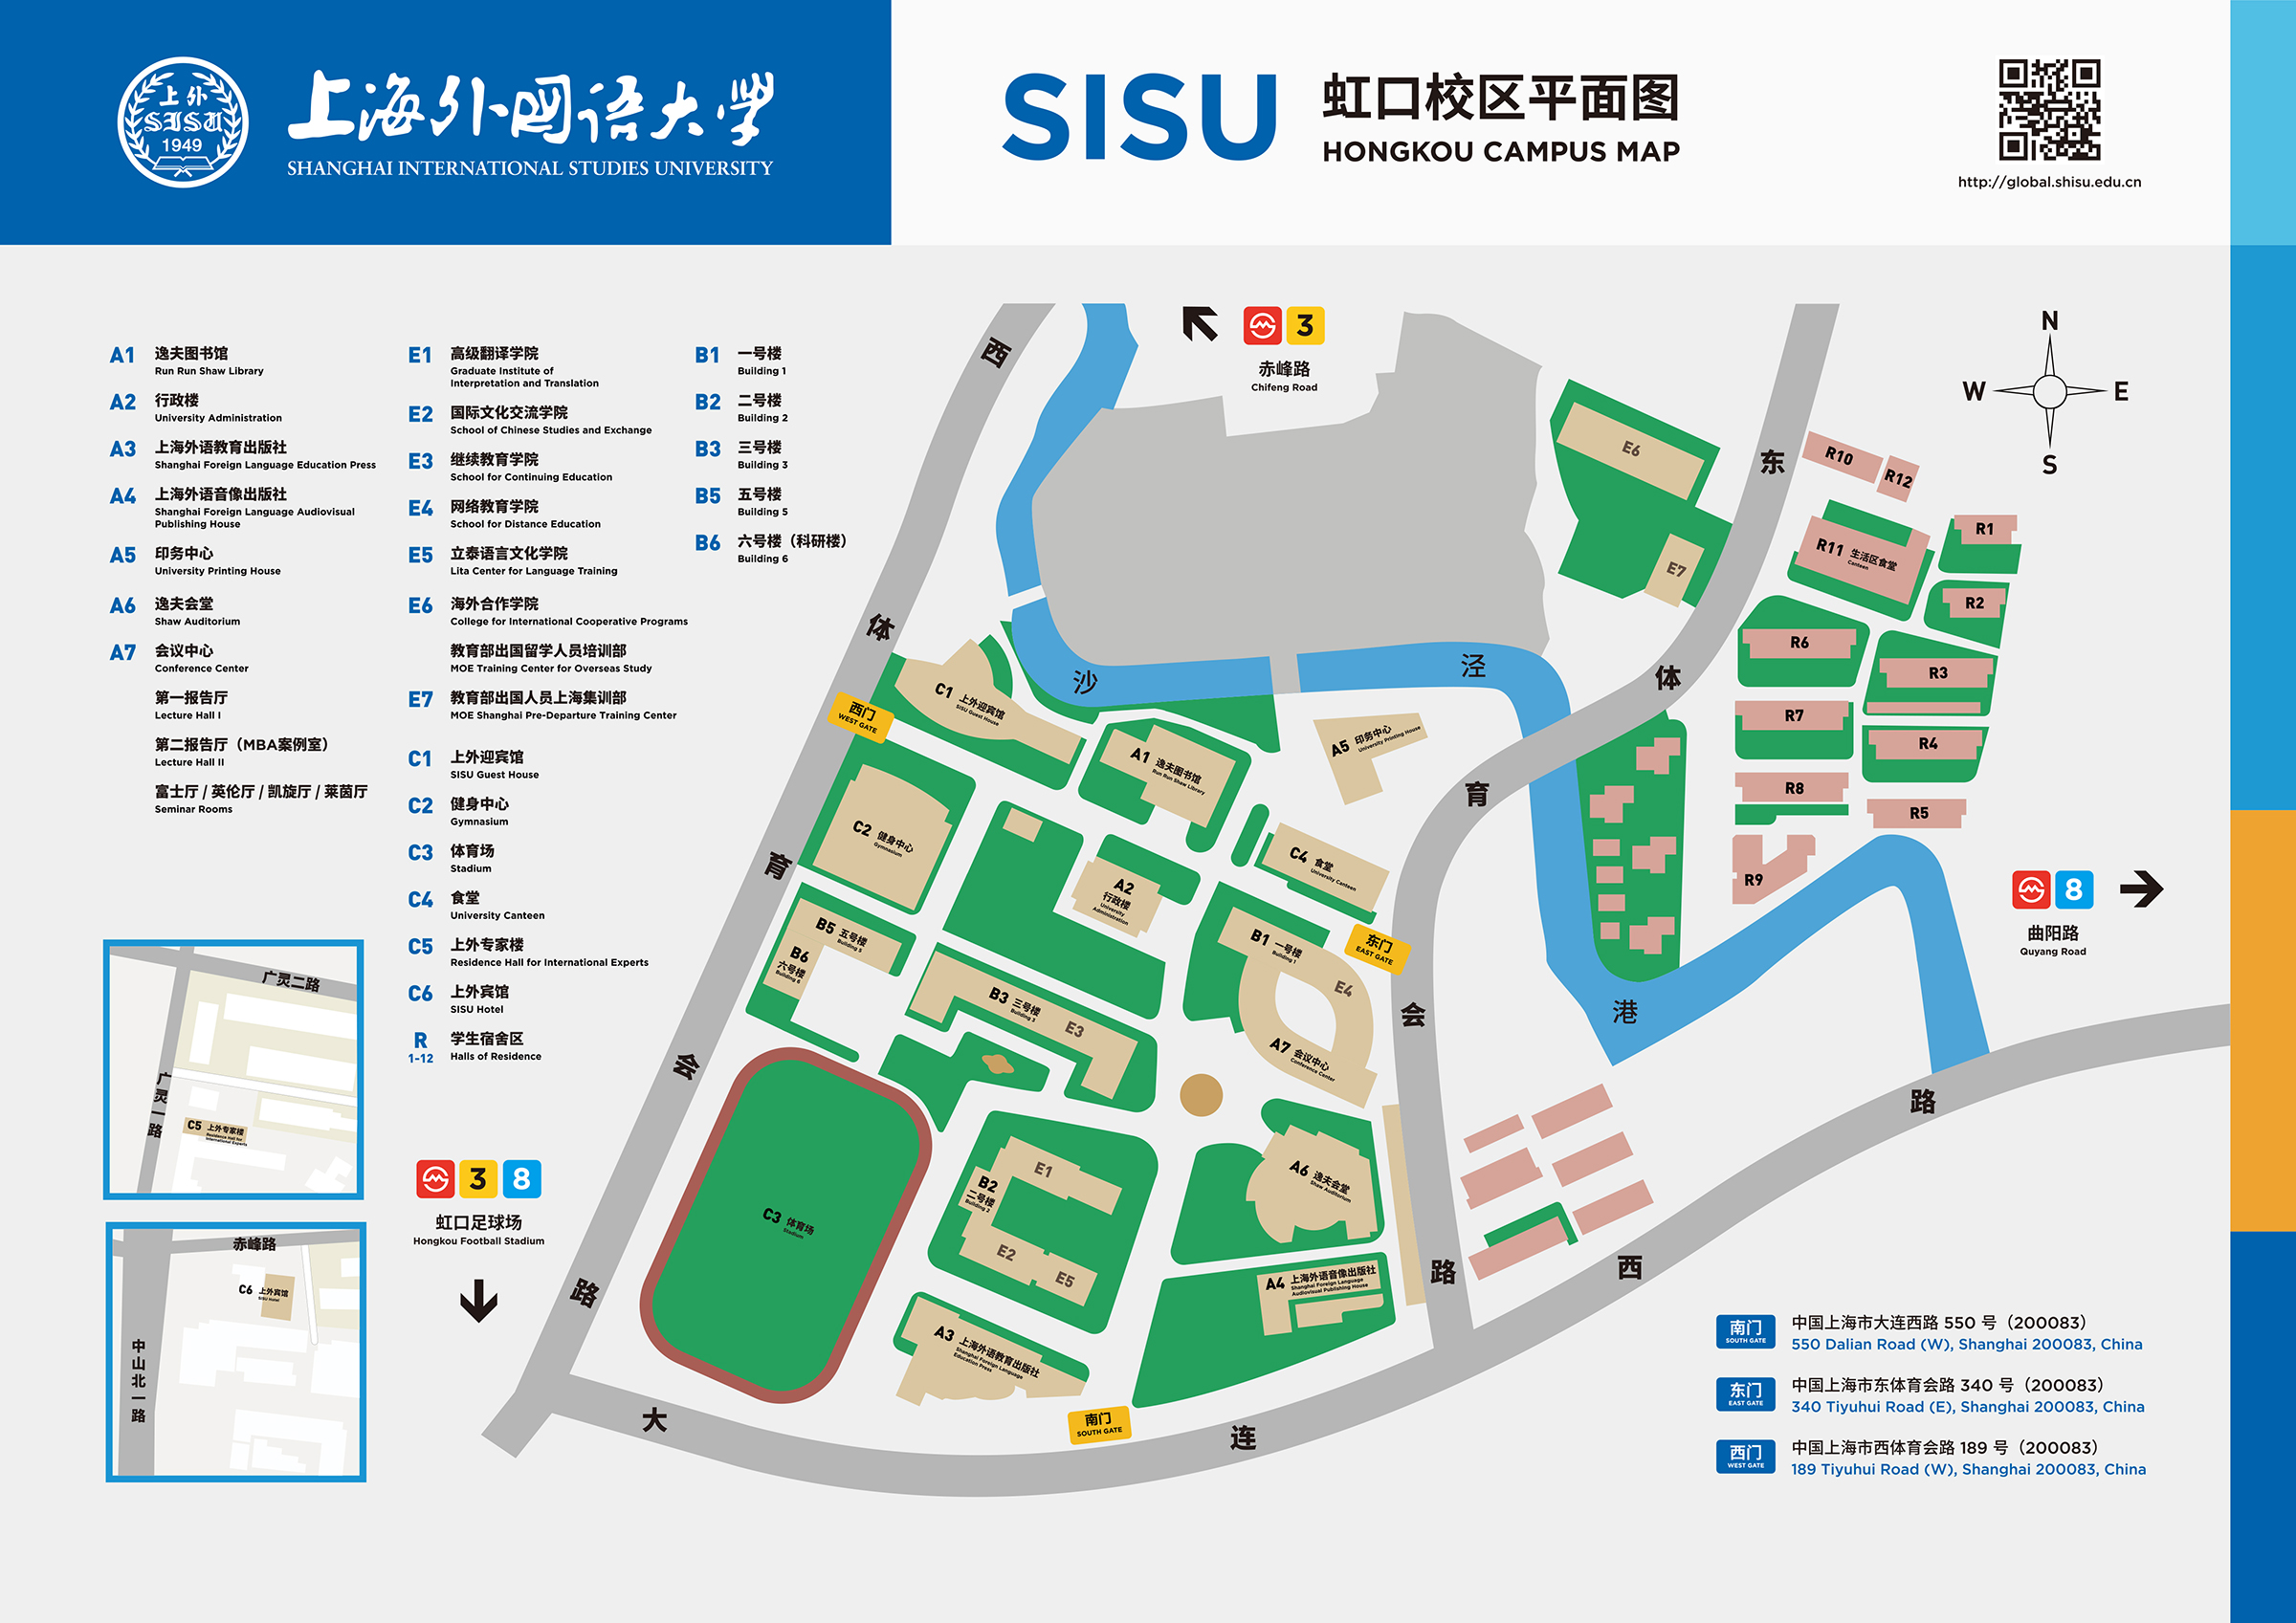 SISU-Hongkou-Campus-Map-small.jpg